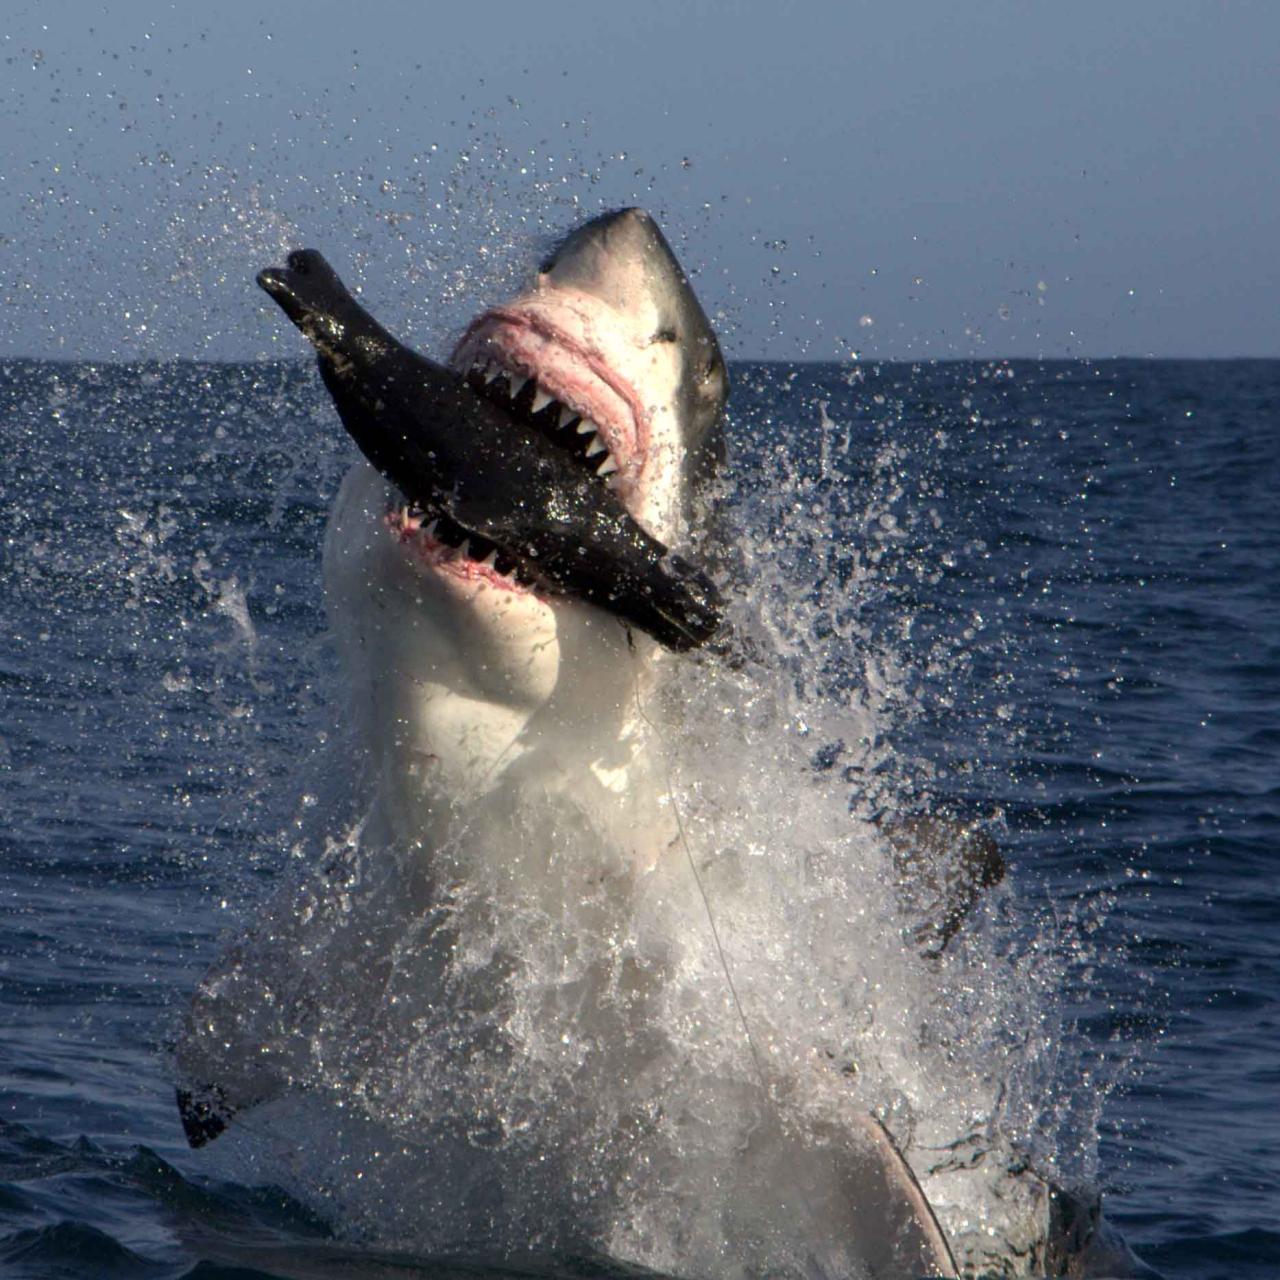 shark eating seal hd